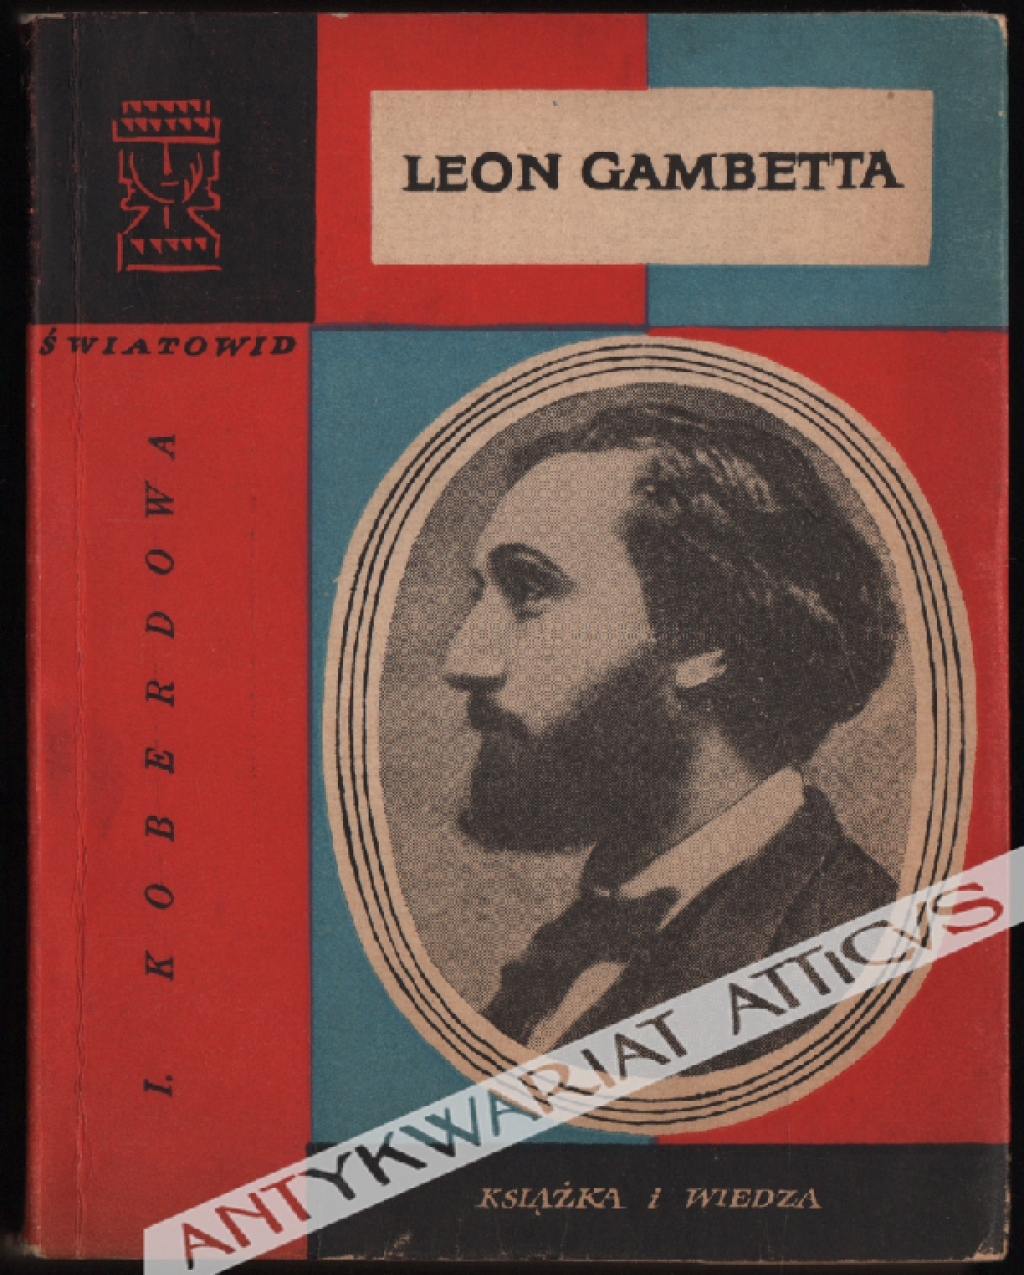 Leon Gambetta  [egz. z księgozbioru J. Łojka]